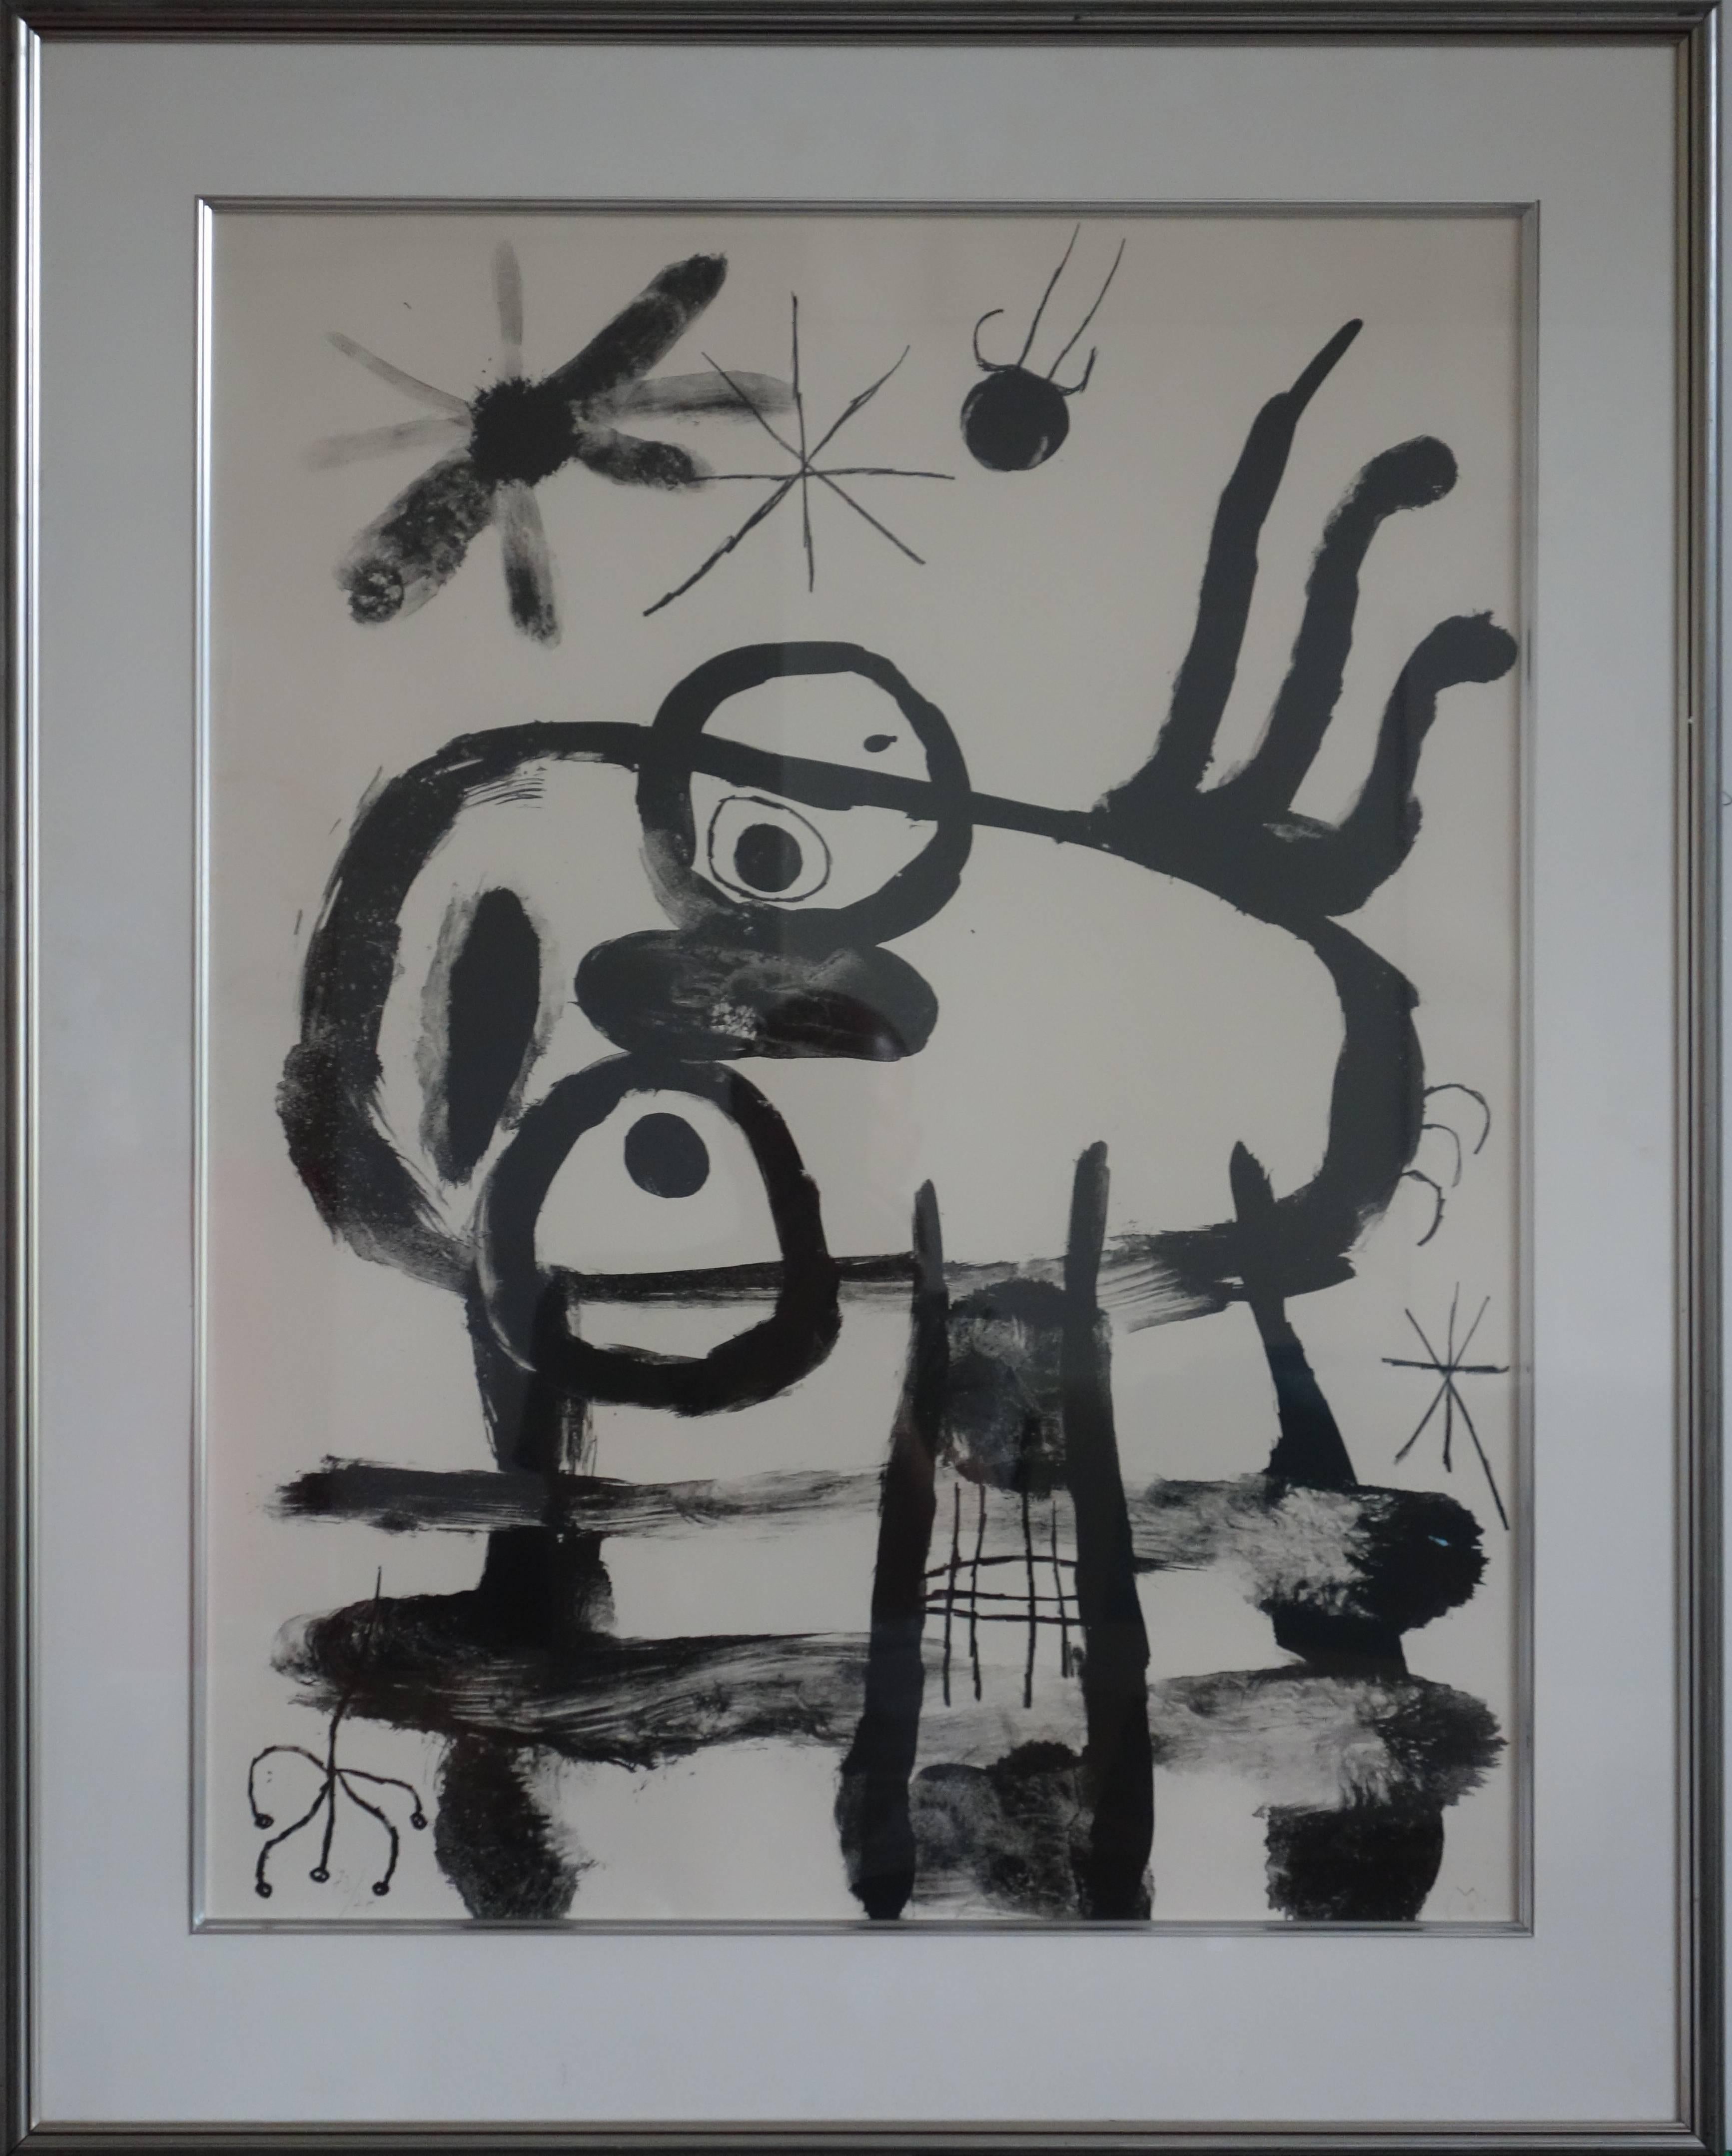 Joan Miró Abstract Print - Album 19 : Plate 5, Funny Man - Original handsigned lithograph - 75 copies